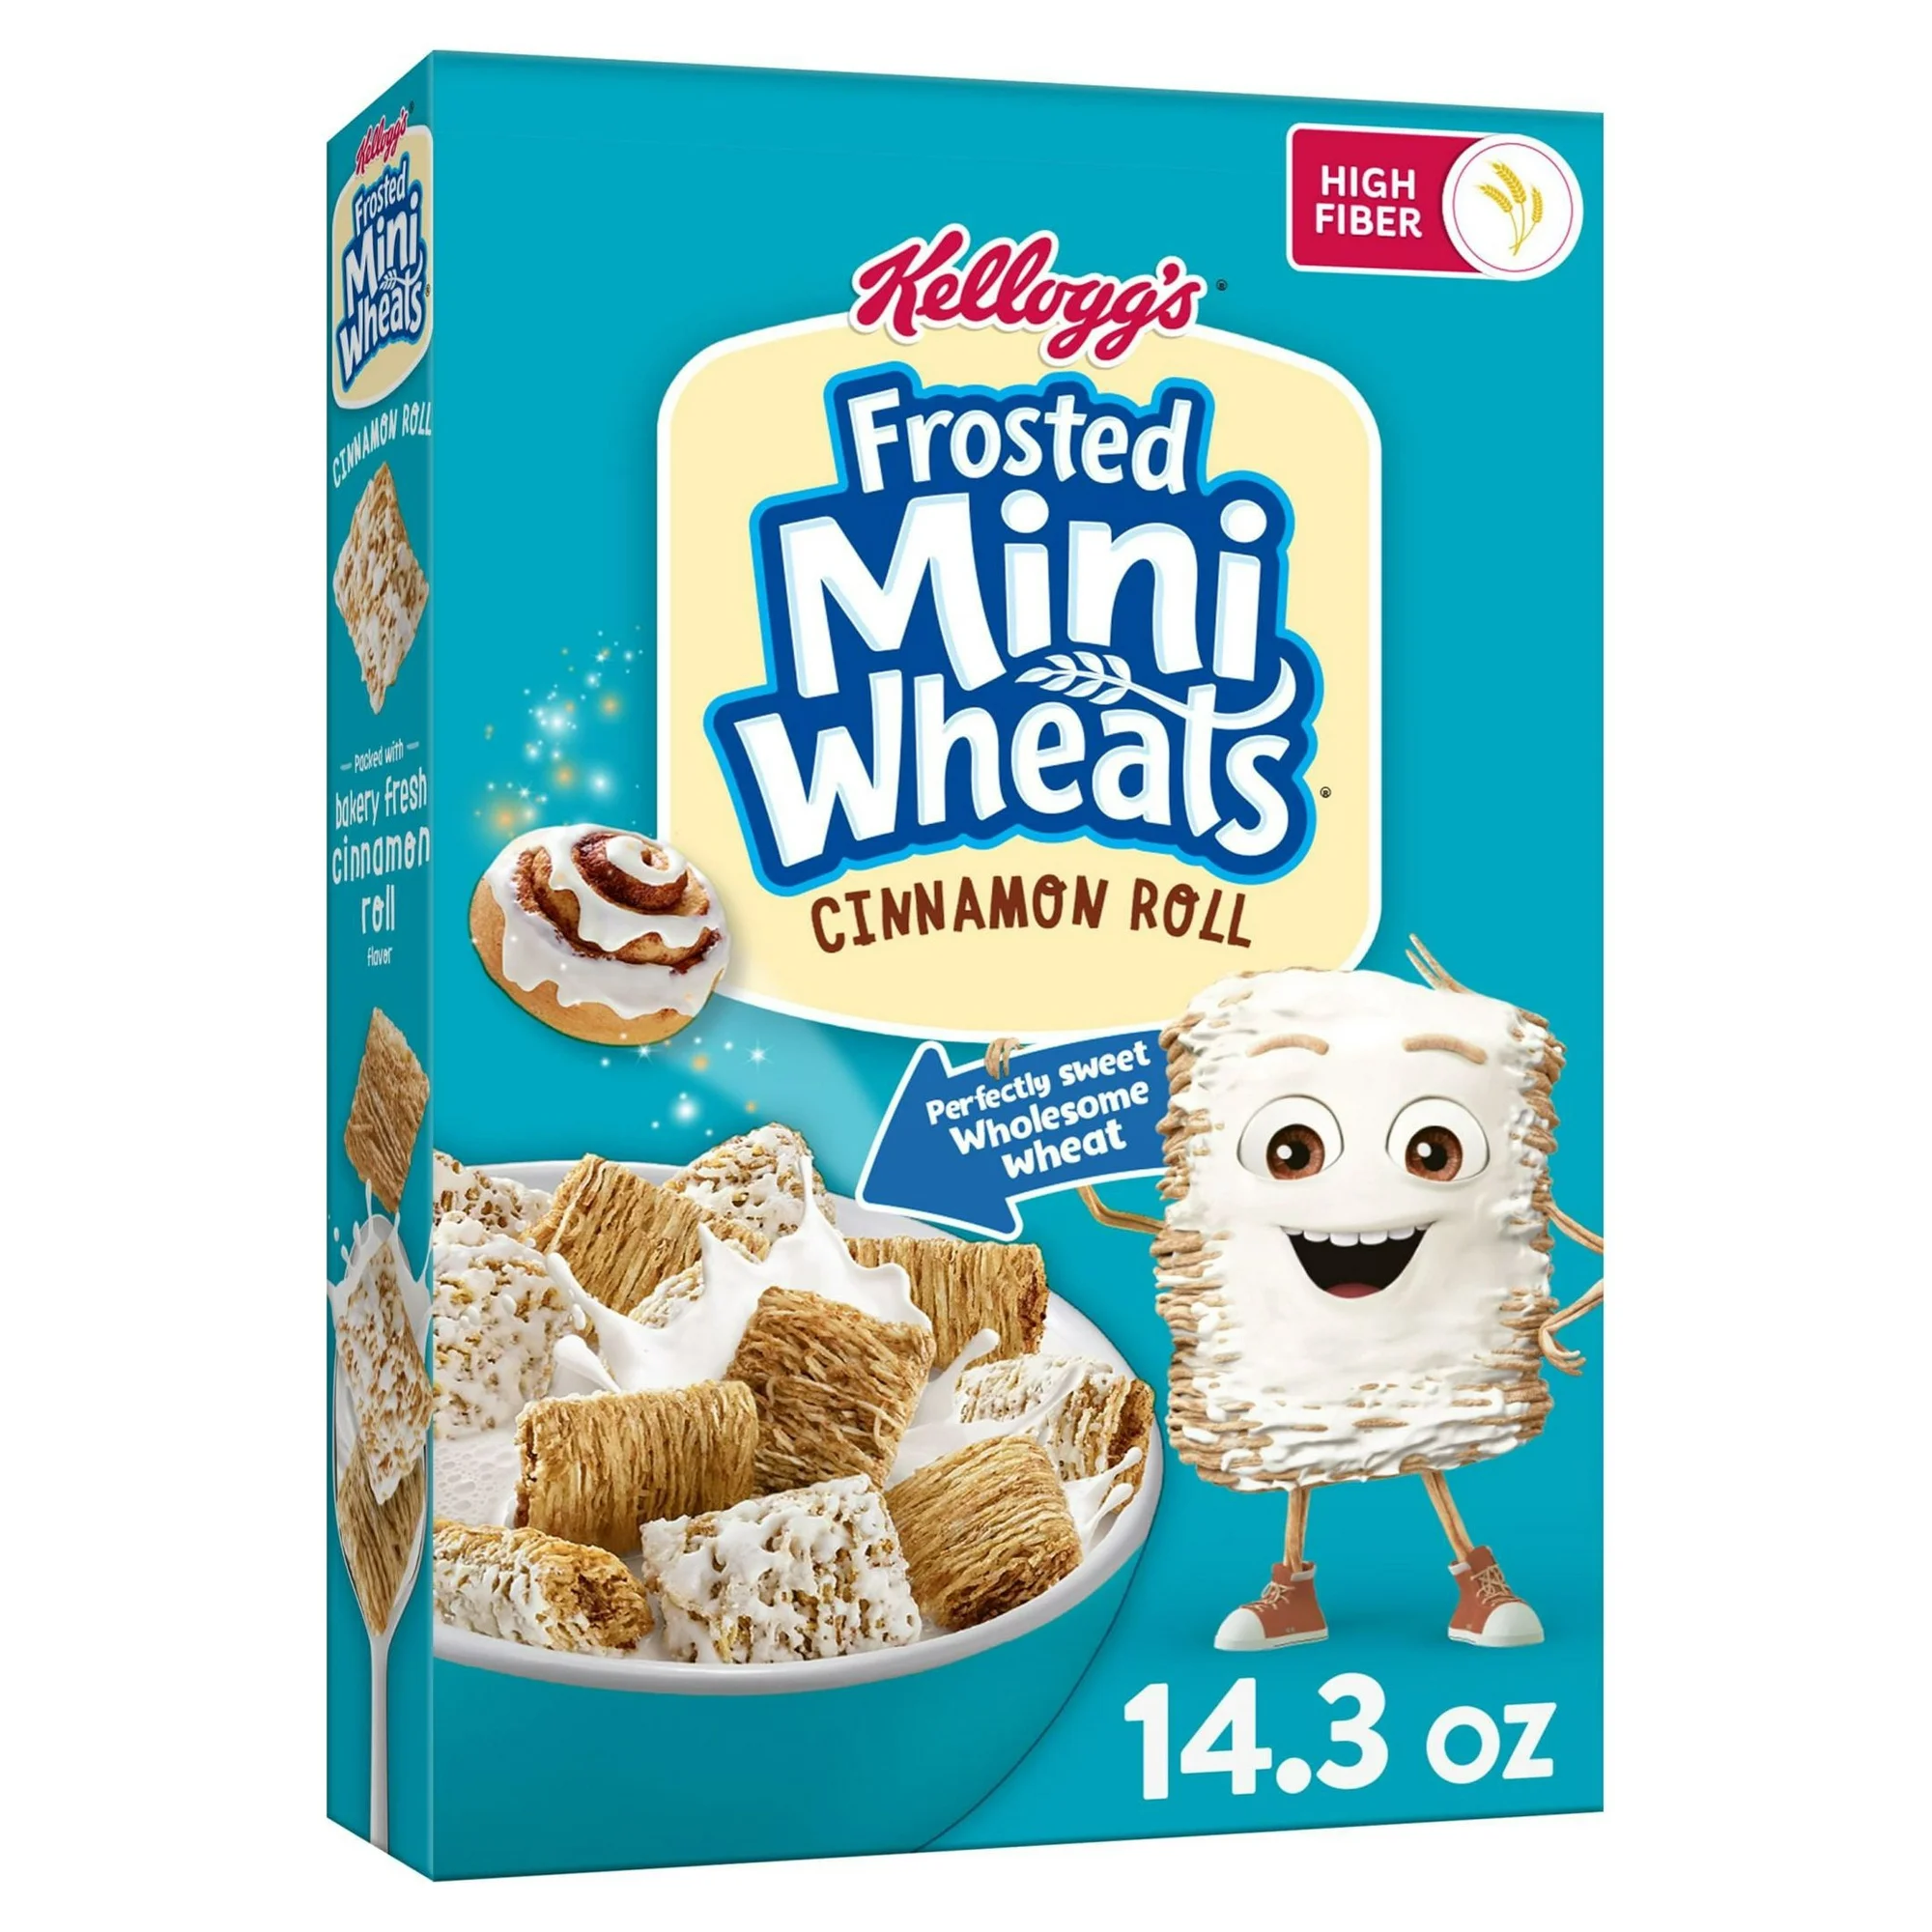 The box of Kellogg’s Frosted Mini Wheats Cinnamon Roll